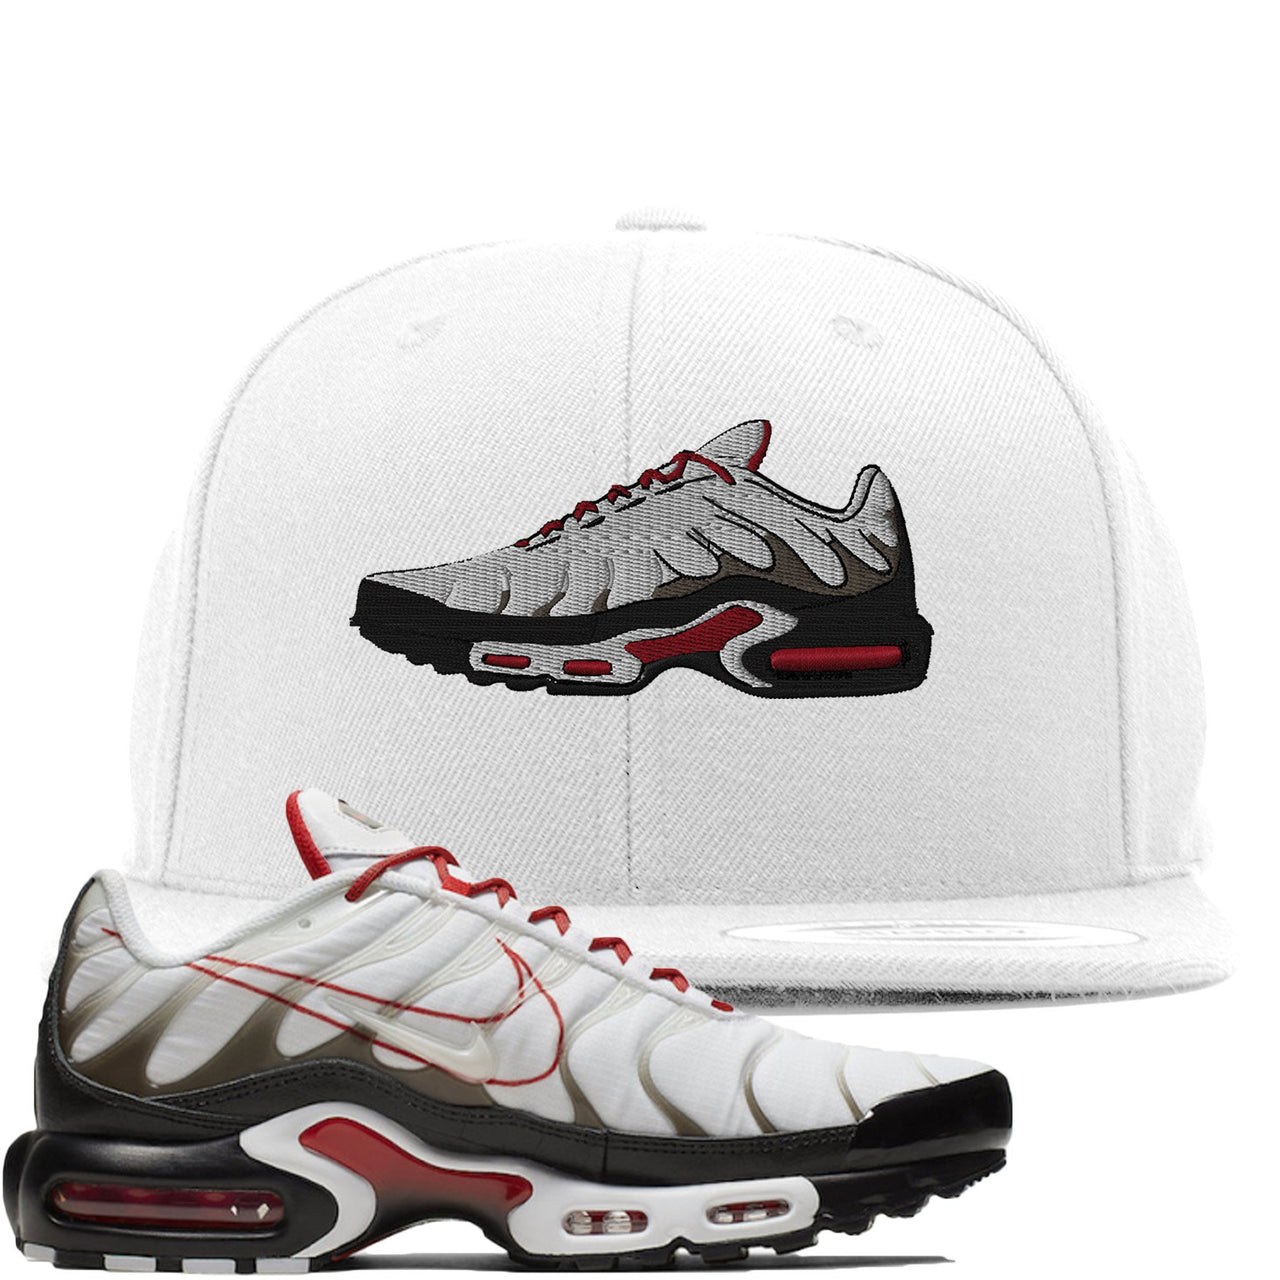 White University Red Pluses Snapback | Shoe, White